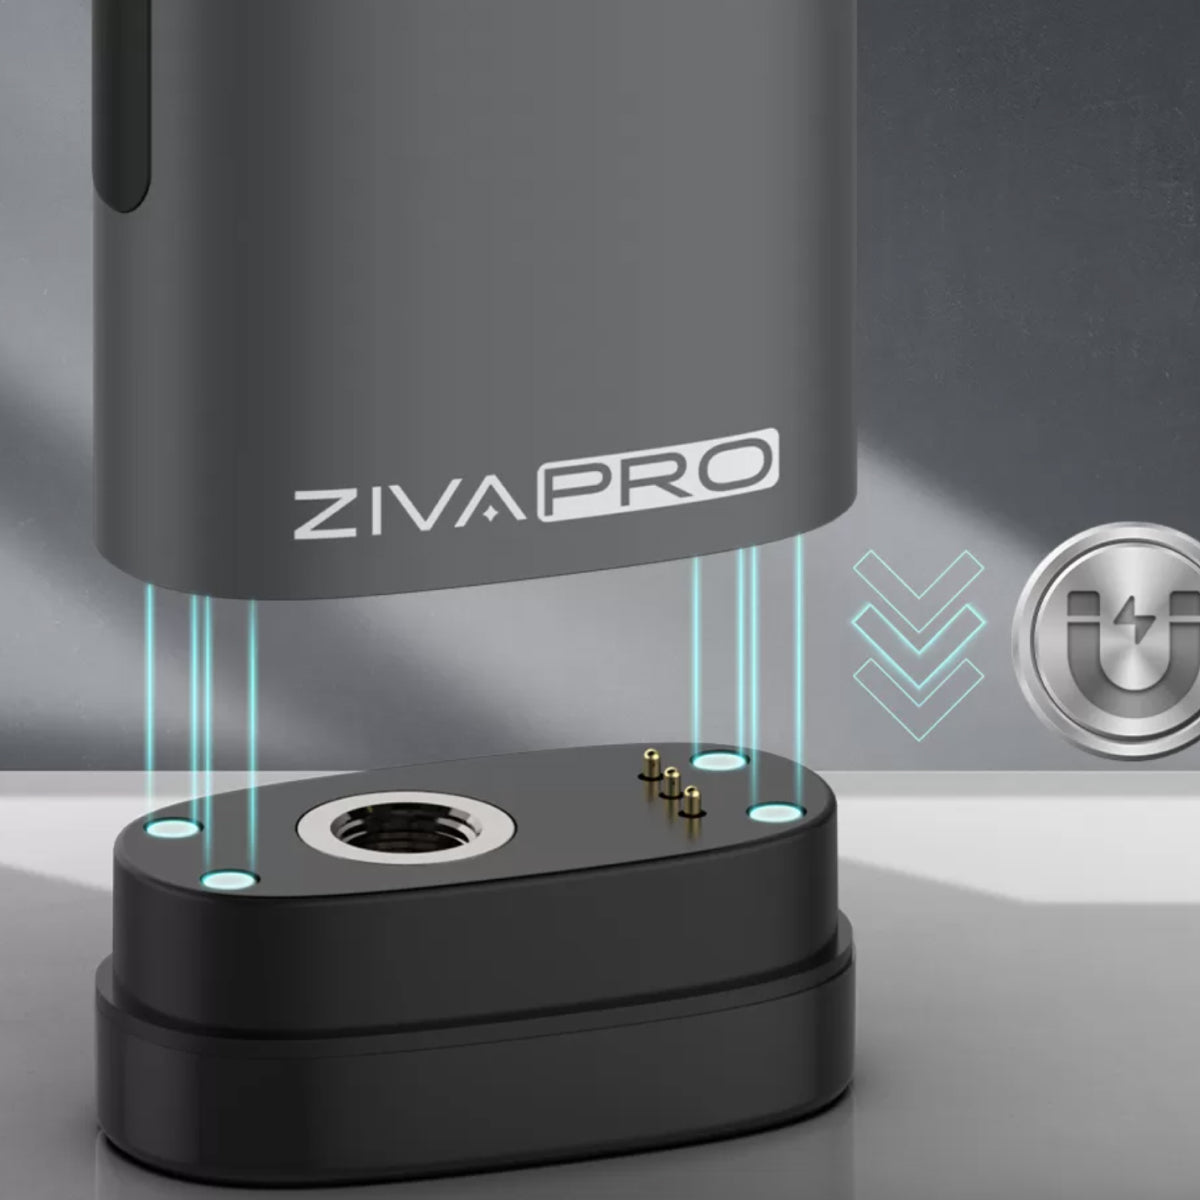 Yocan Ziva Pro Smart Vaporizer Mod - magnetic connection